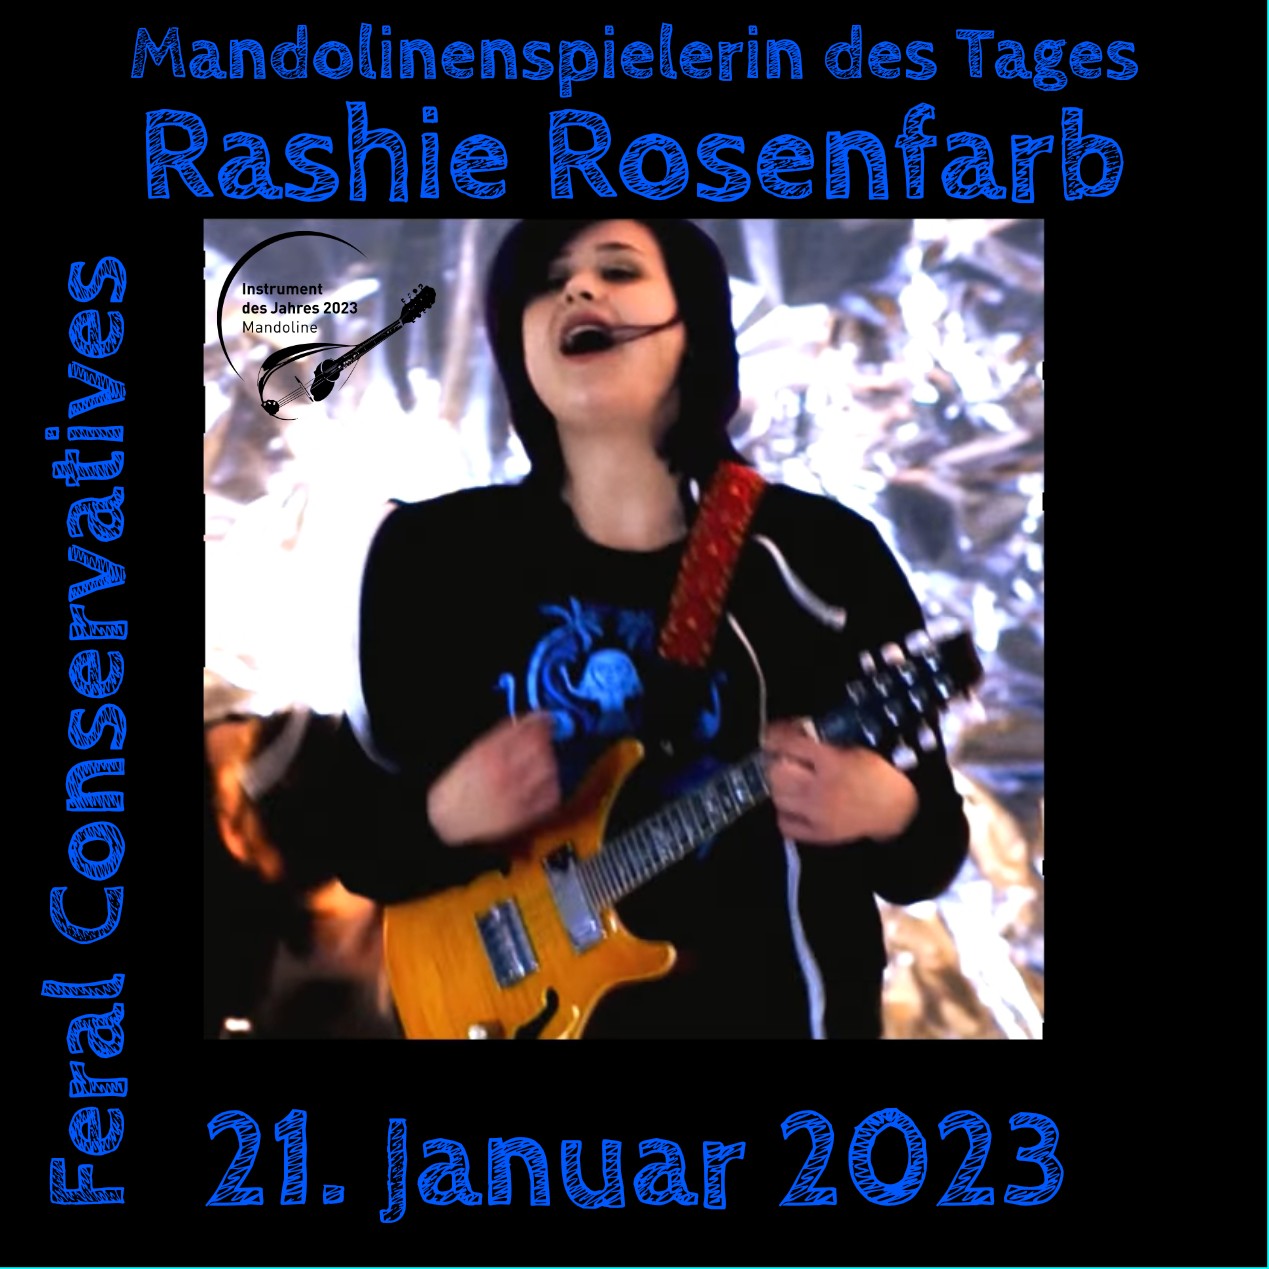 21. Januar - Rashie Rosenfarb Mandoline Instrument des Jahres 2023 Mandolinenspielerin des Tages